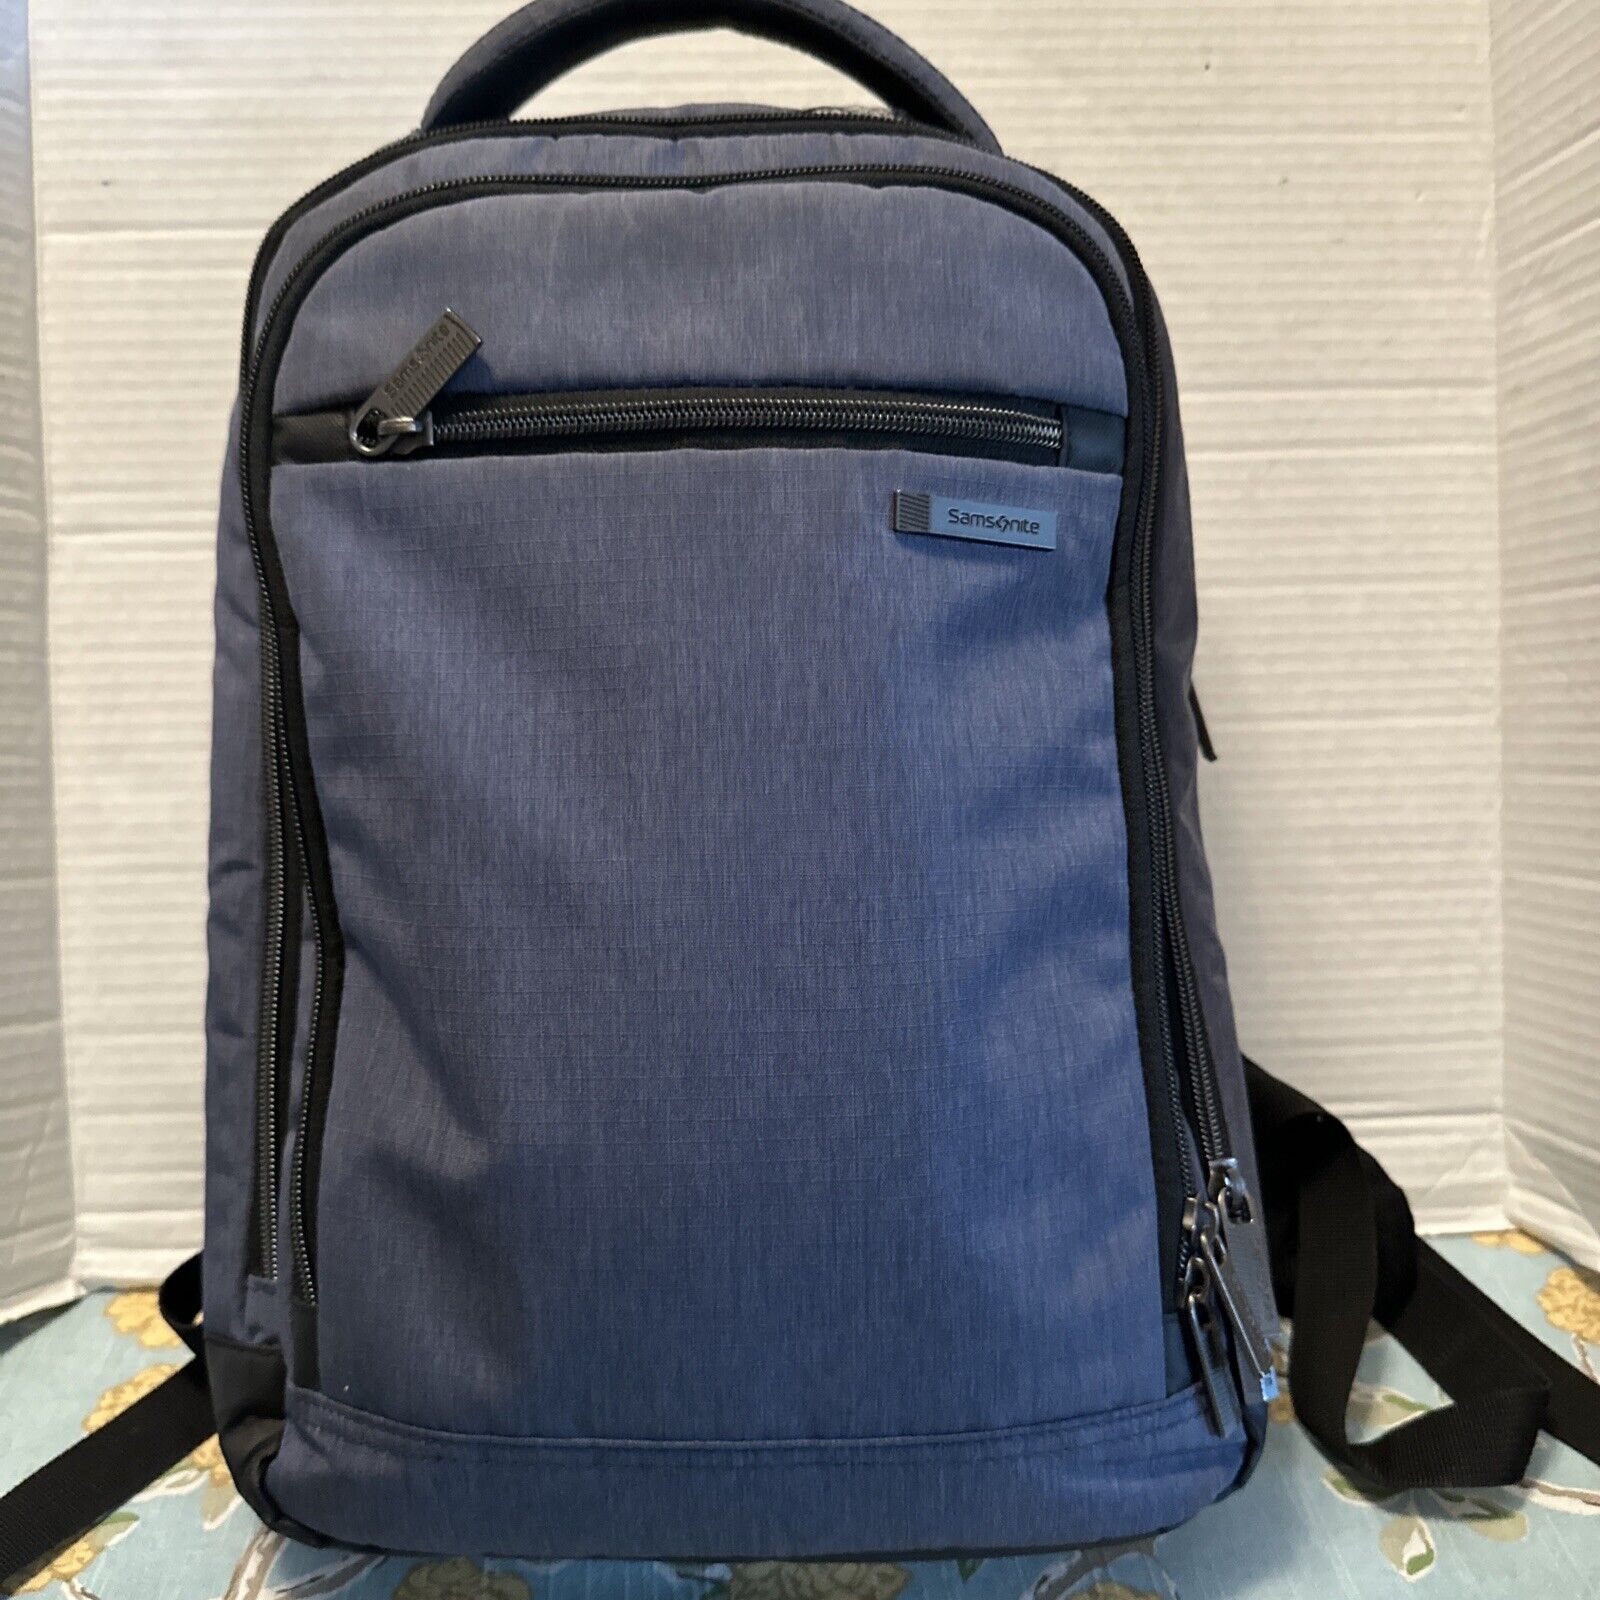 Samsonite Blue Travel Backpack Computer Laptop Case Carry On